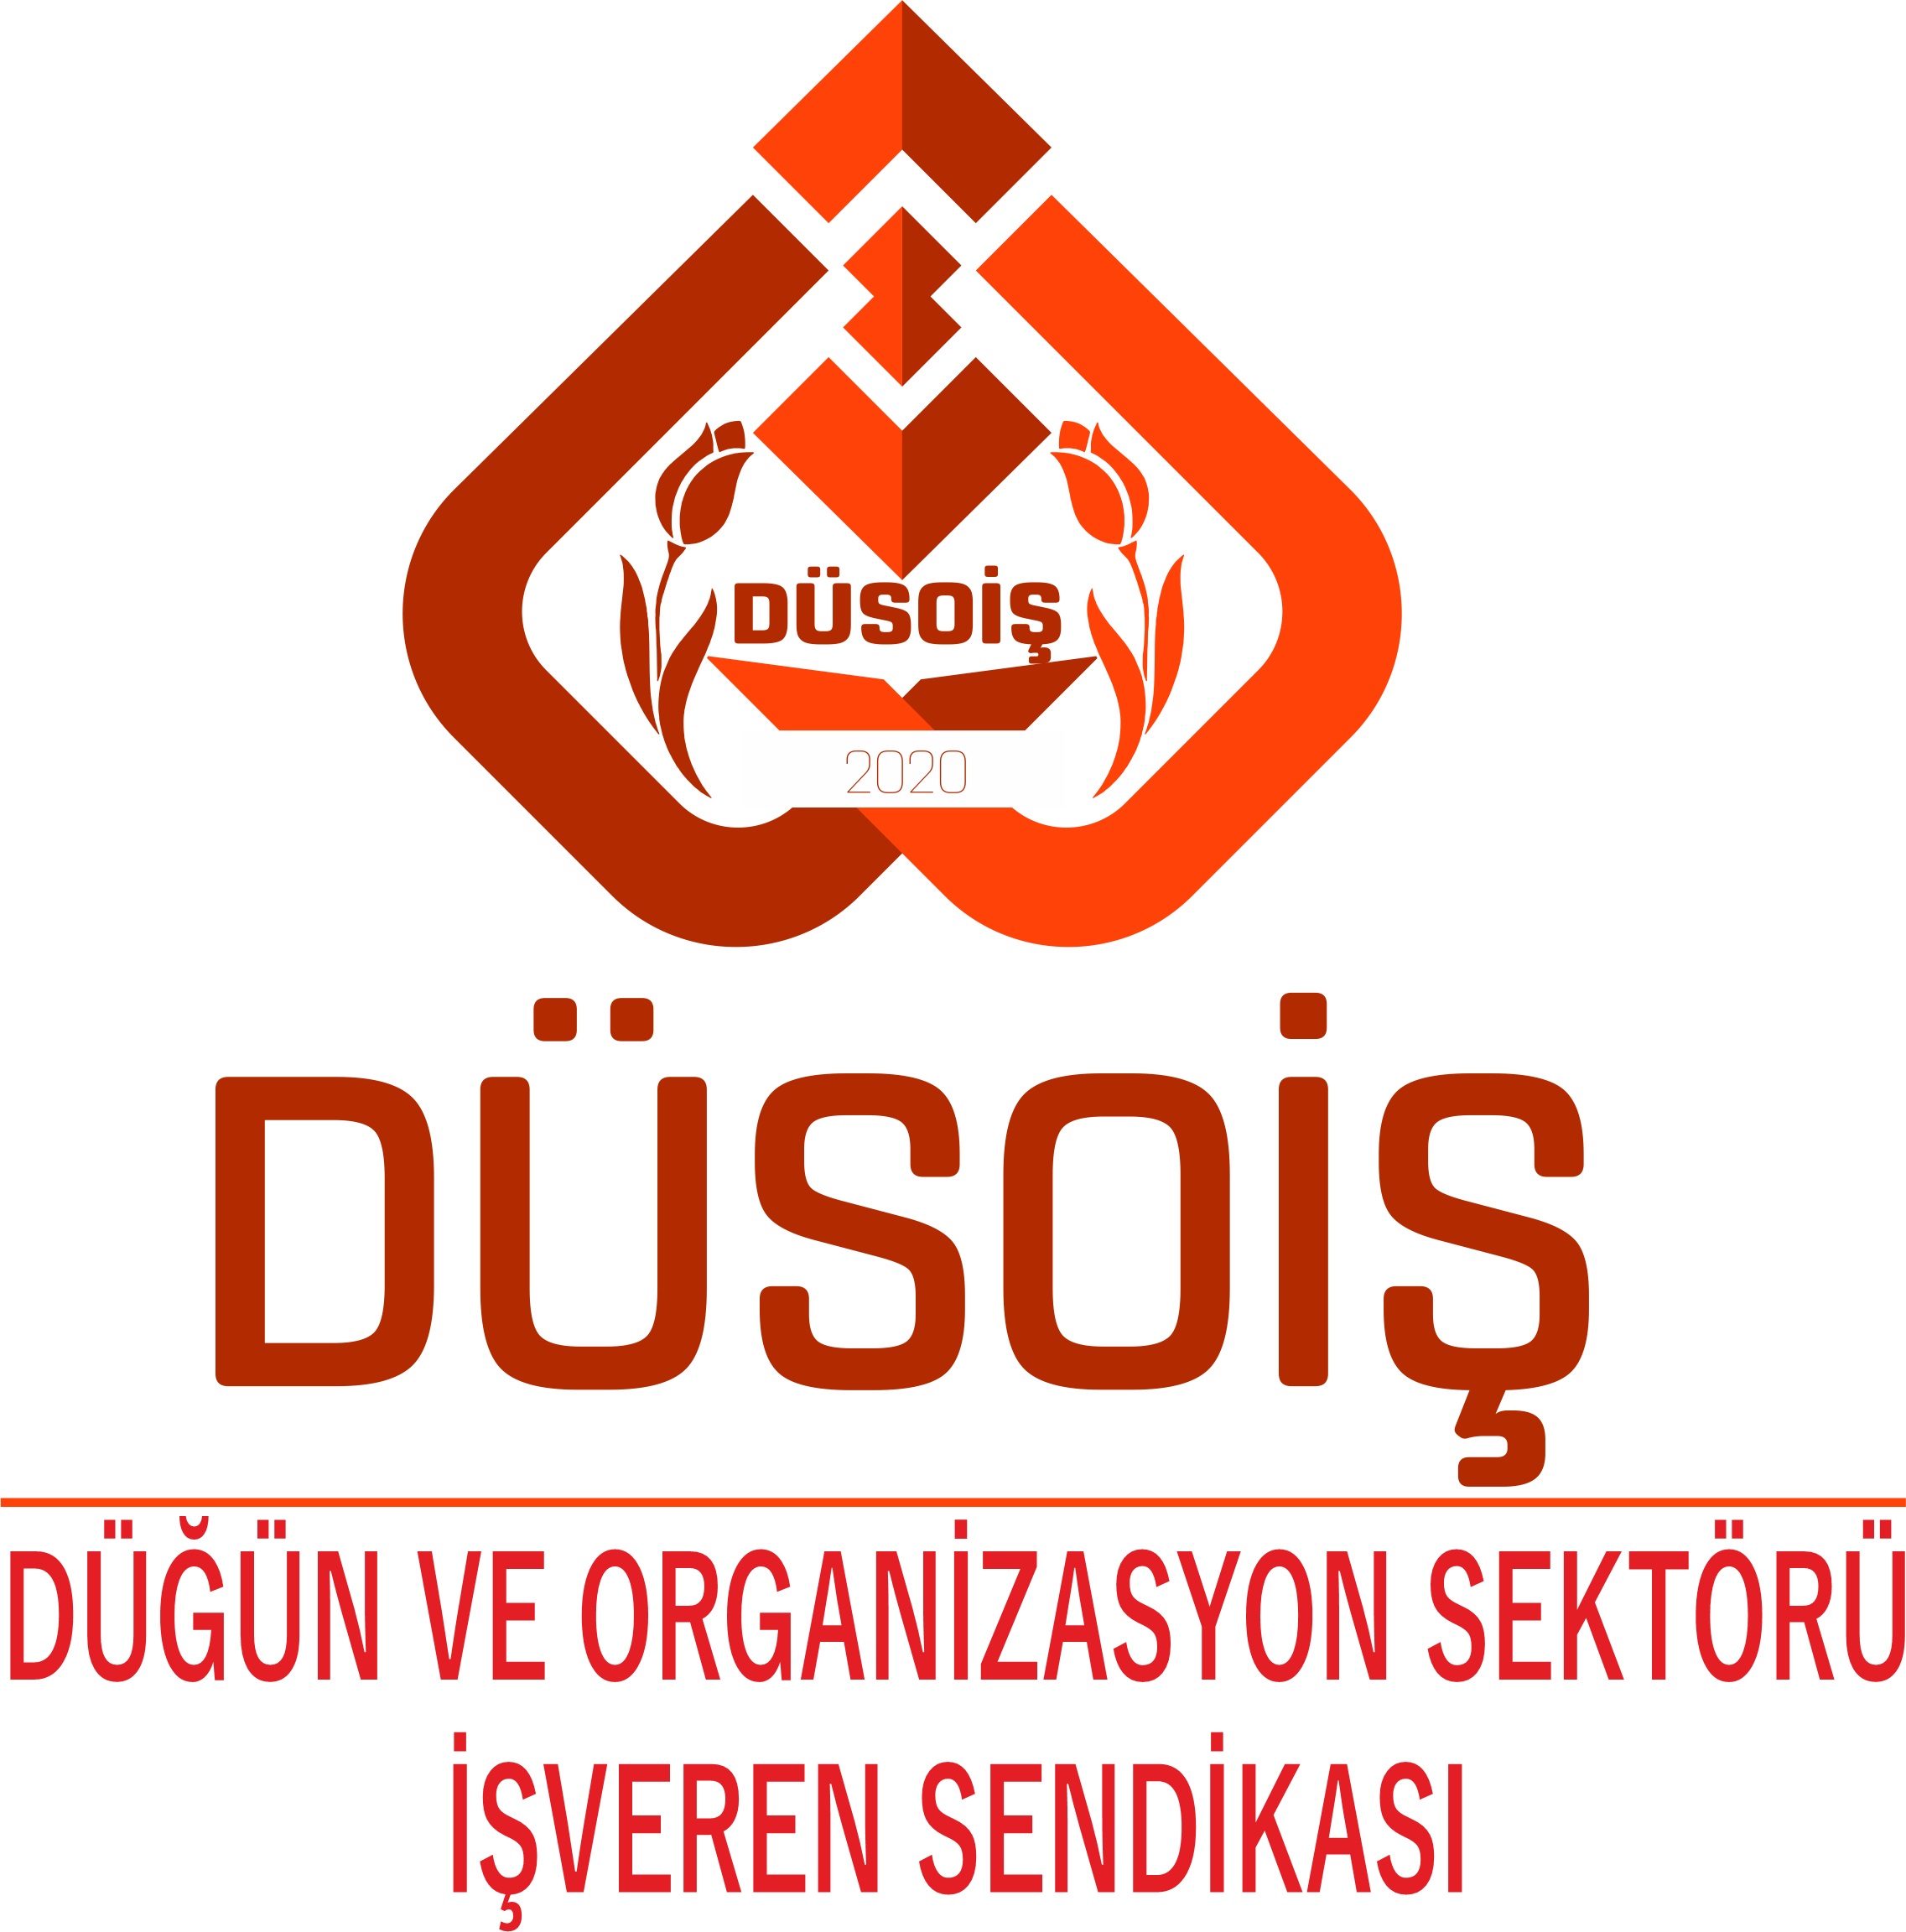 dusois-dik-logo